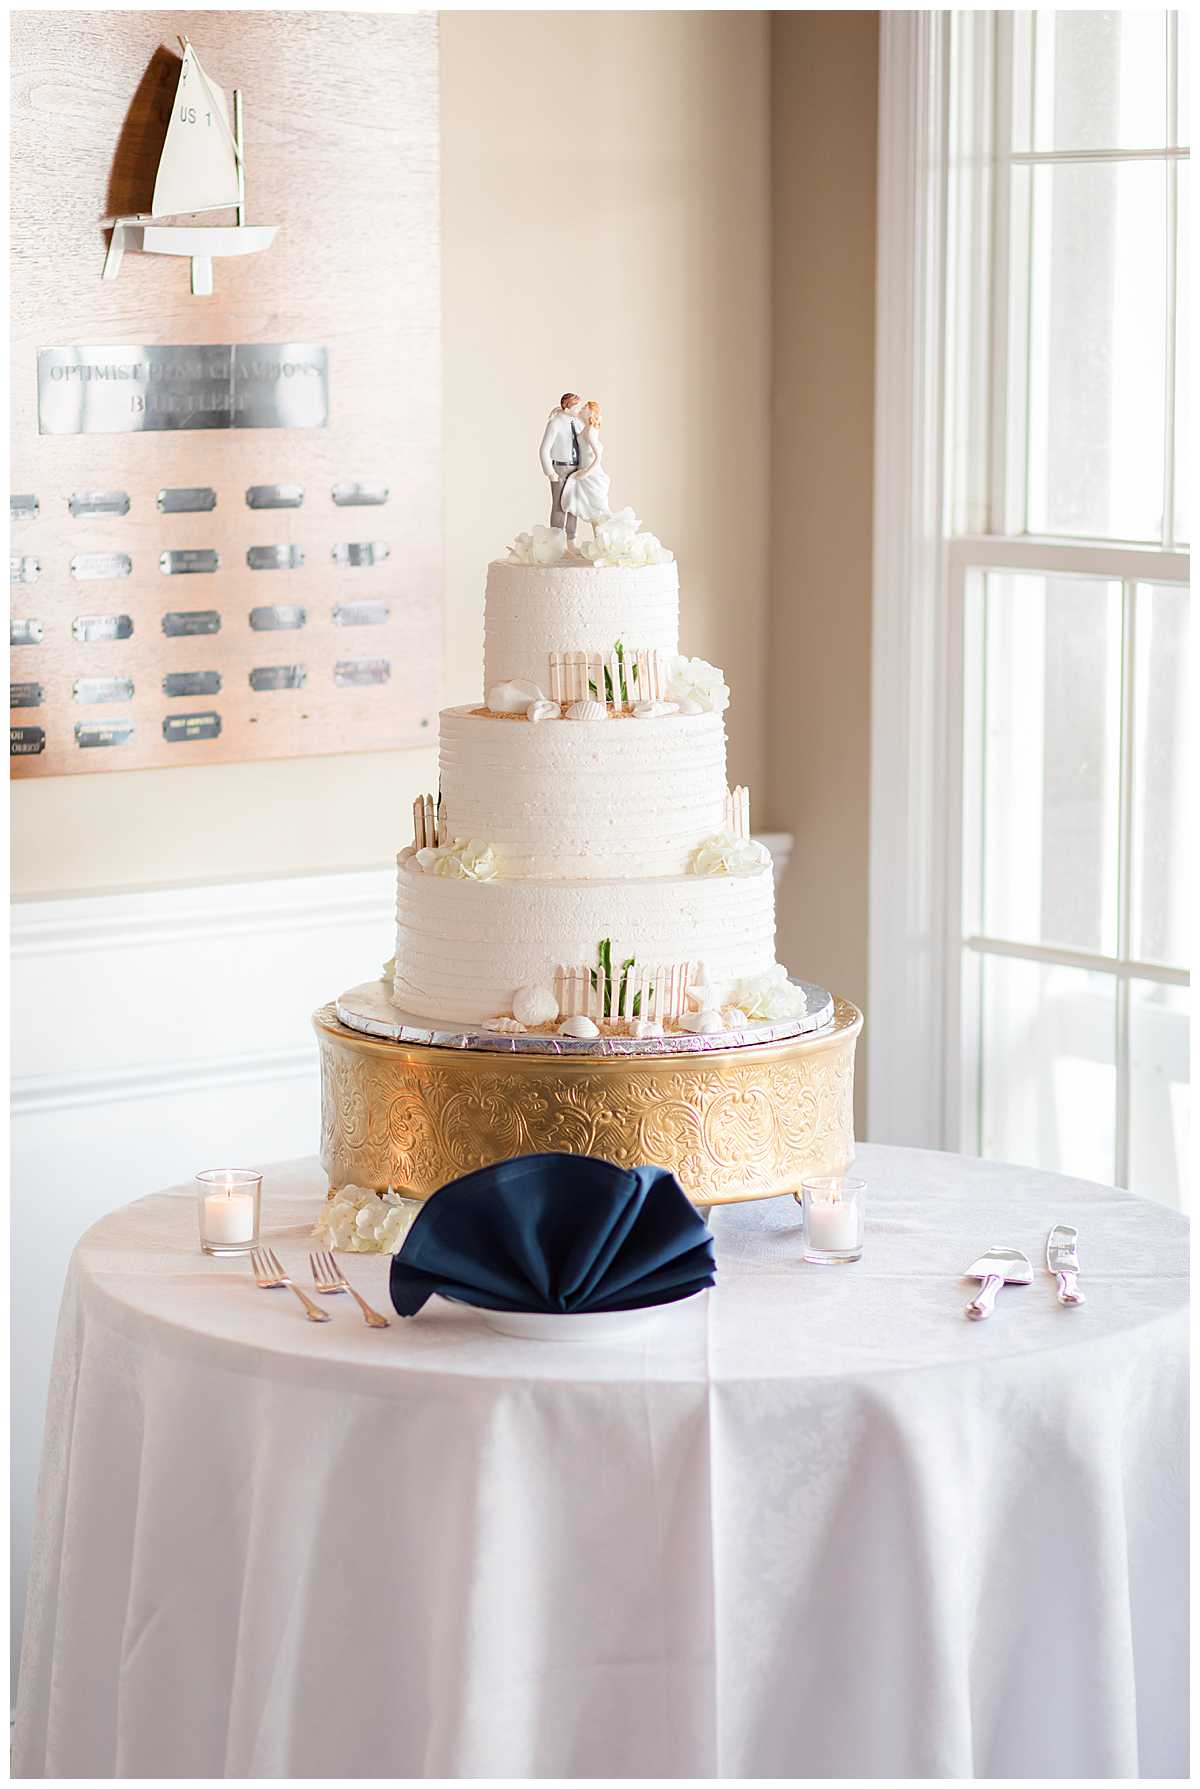 brant-beach-wedding-cake